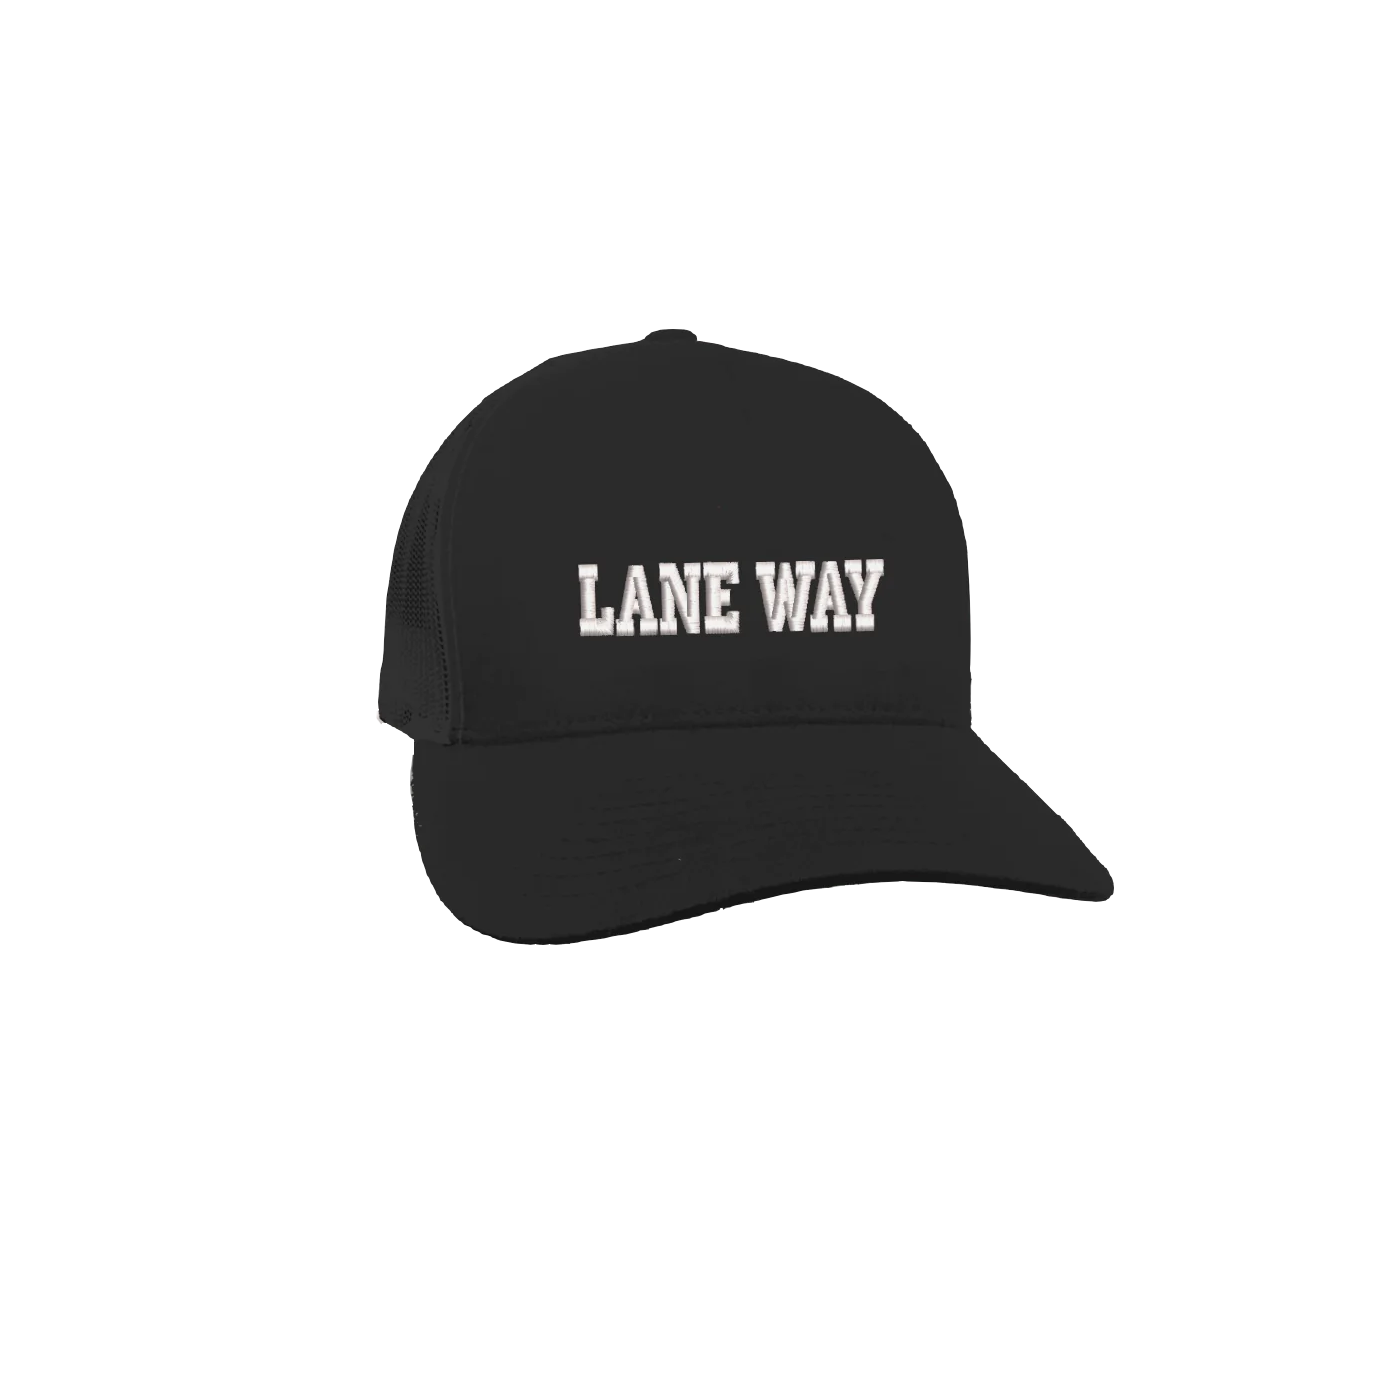 Lane Way Retro Trucker Hat